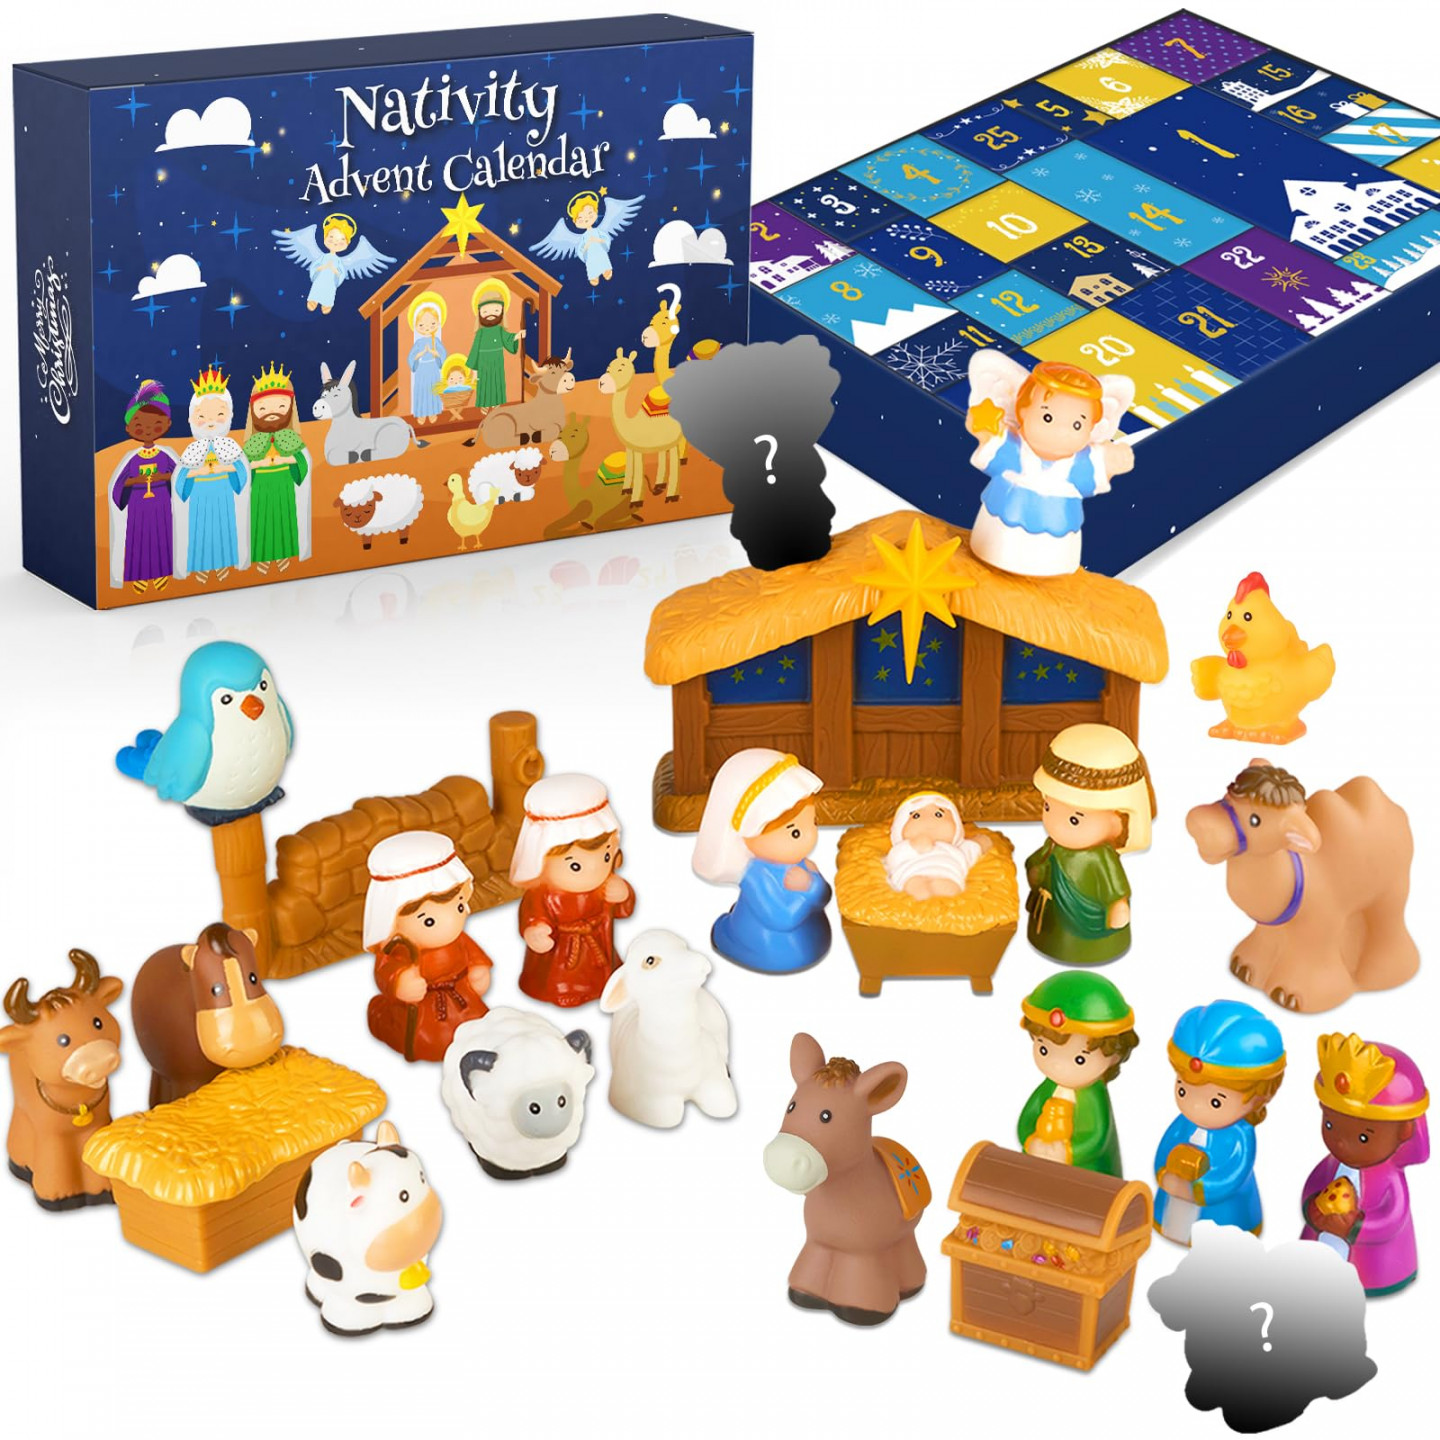 Nativity Advent Calendar Kids, Christmas Story Nativity Playset Christian Advent Calendar for Toddlers, Kids, Boys, Girls, pcs Nativity Scene